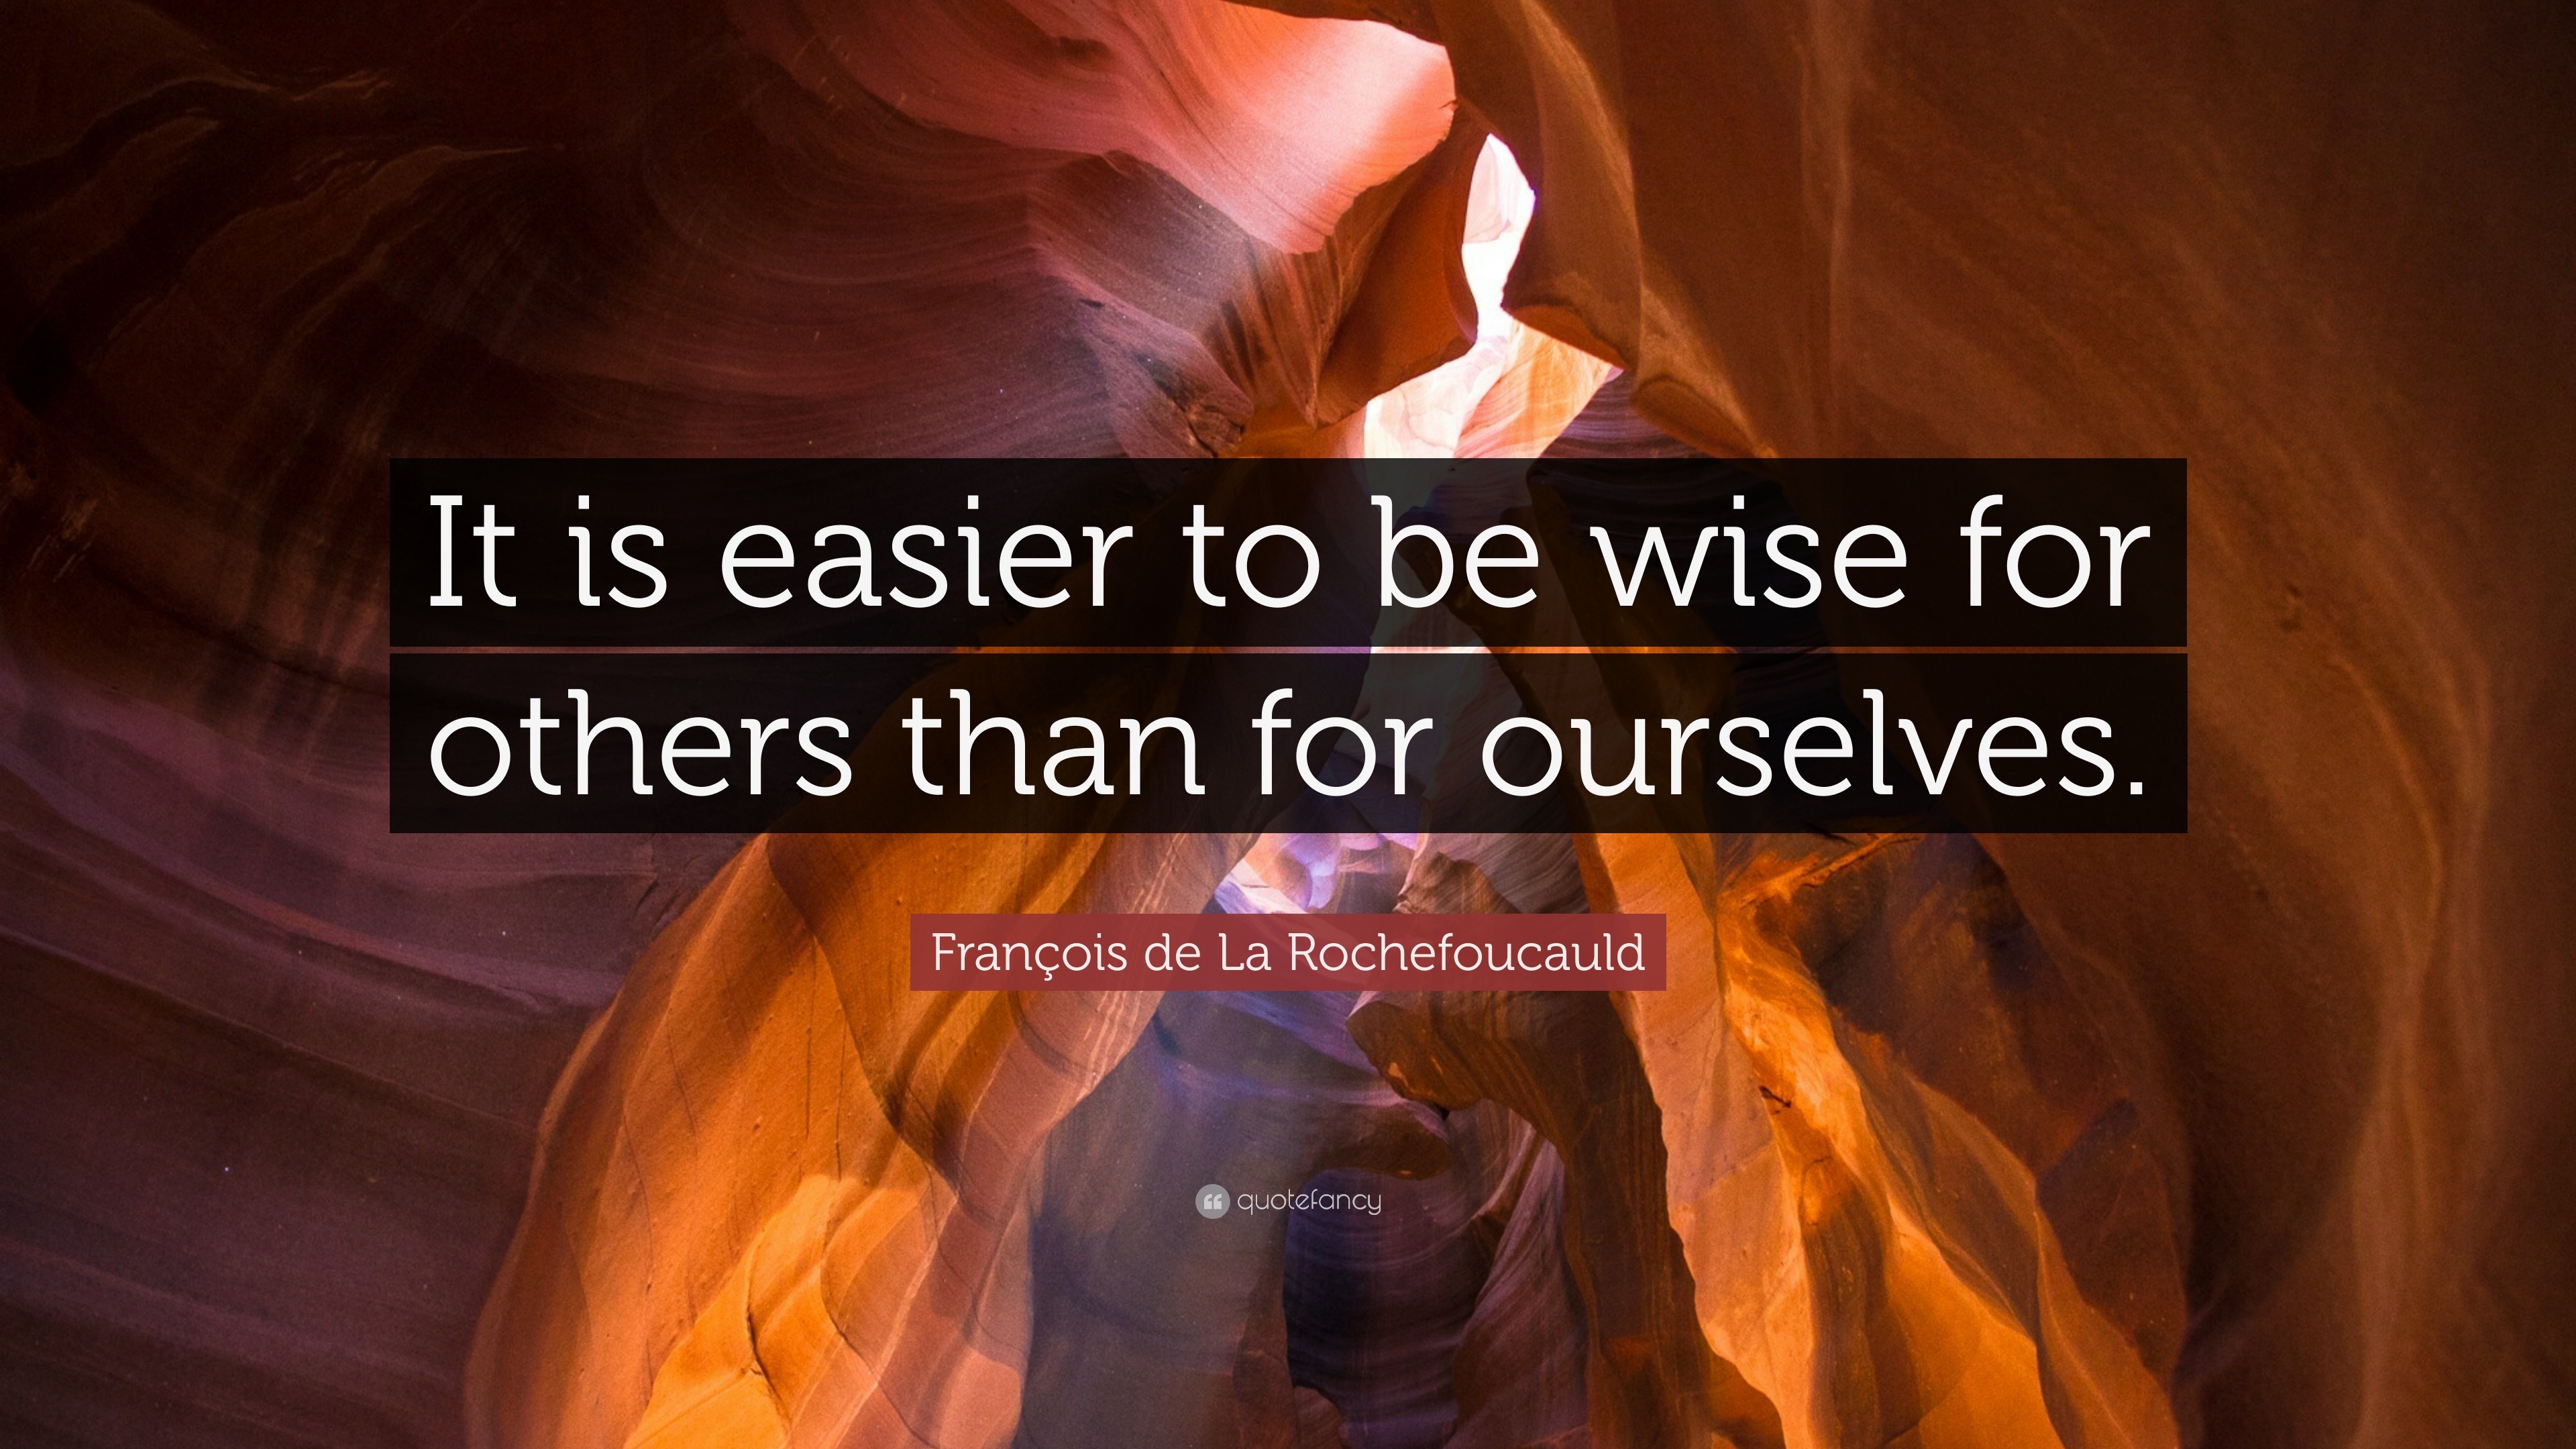 François de La Rochefoucauld Quote: “It is easier to be wise for others ...